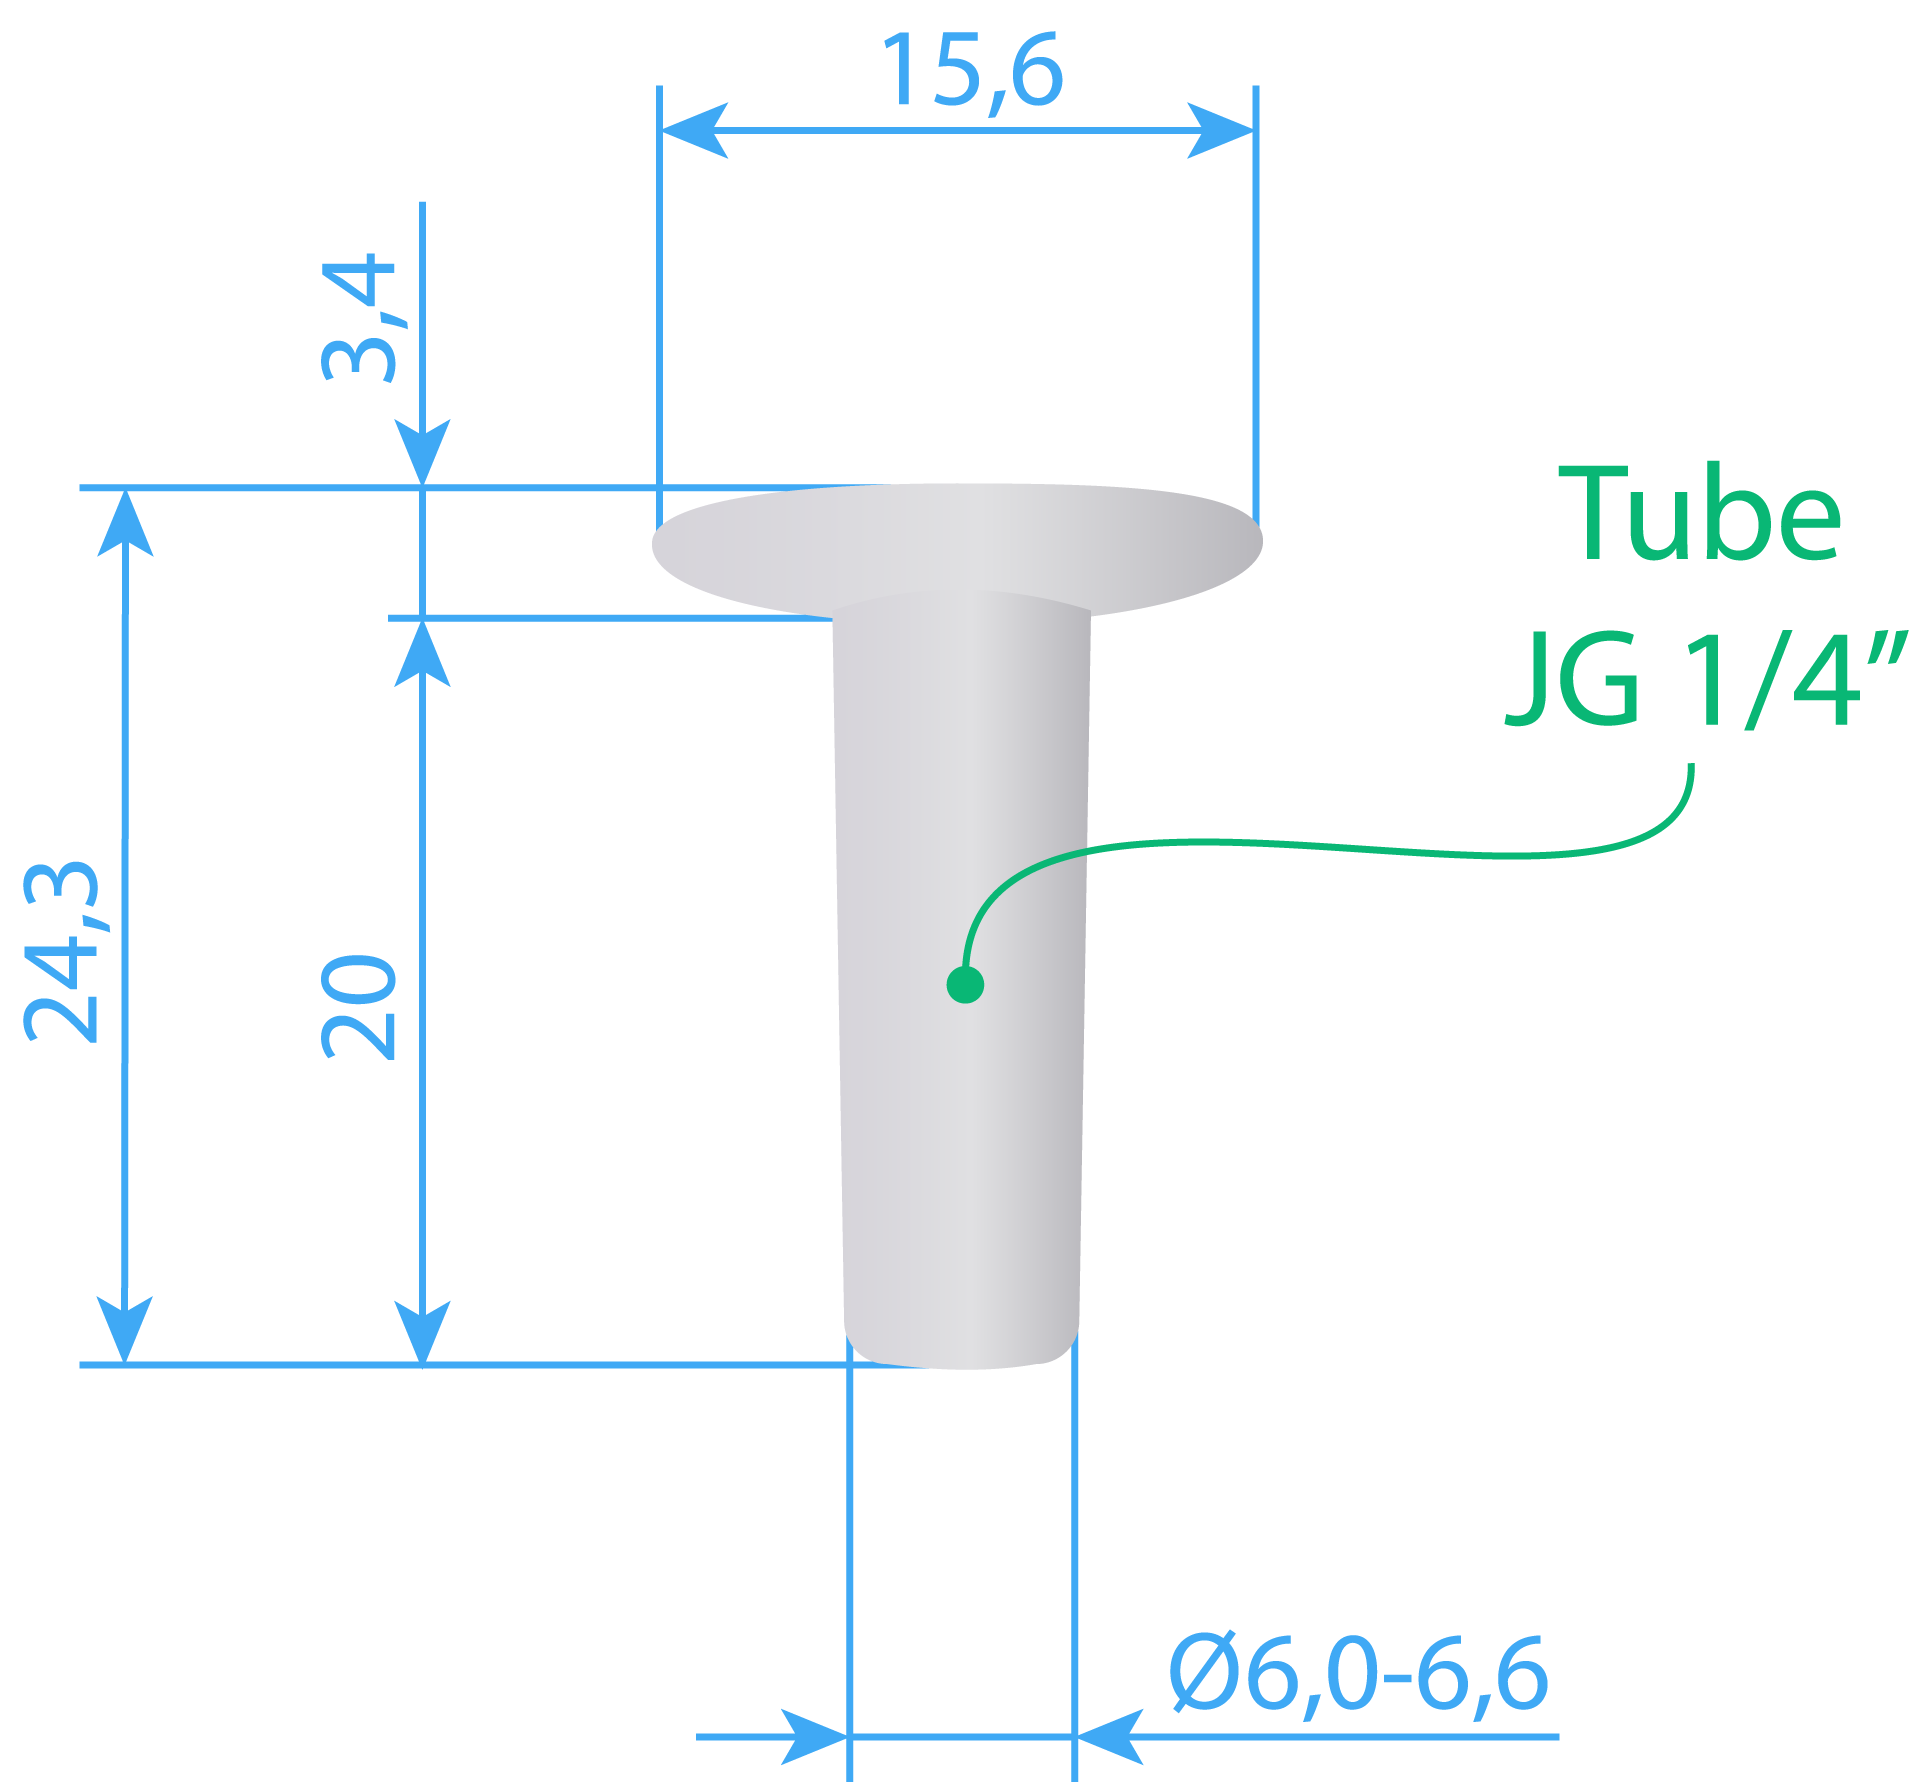 Connector Plug (Tube JG 1/4”) Dimensions